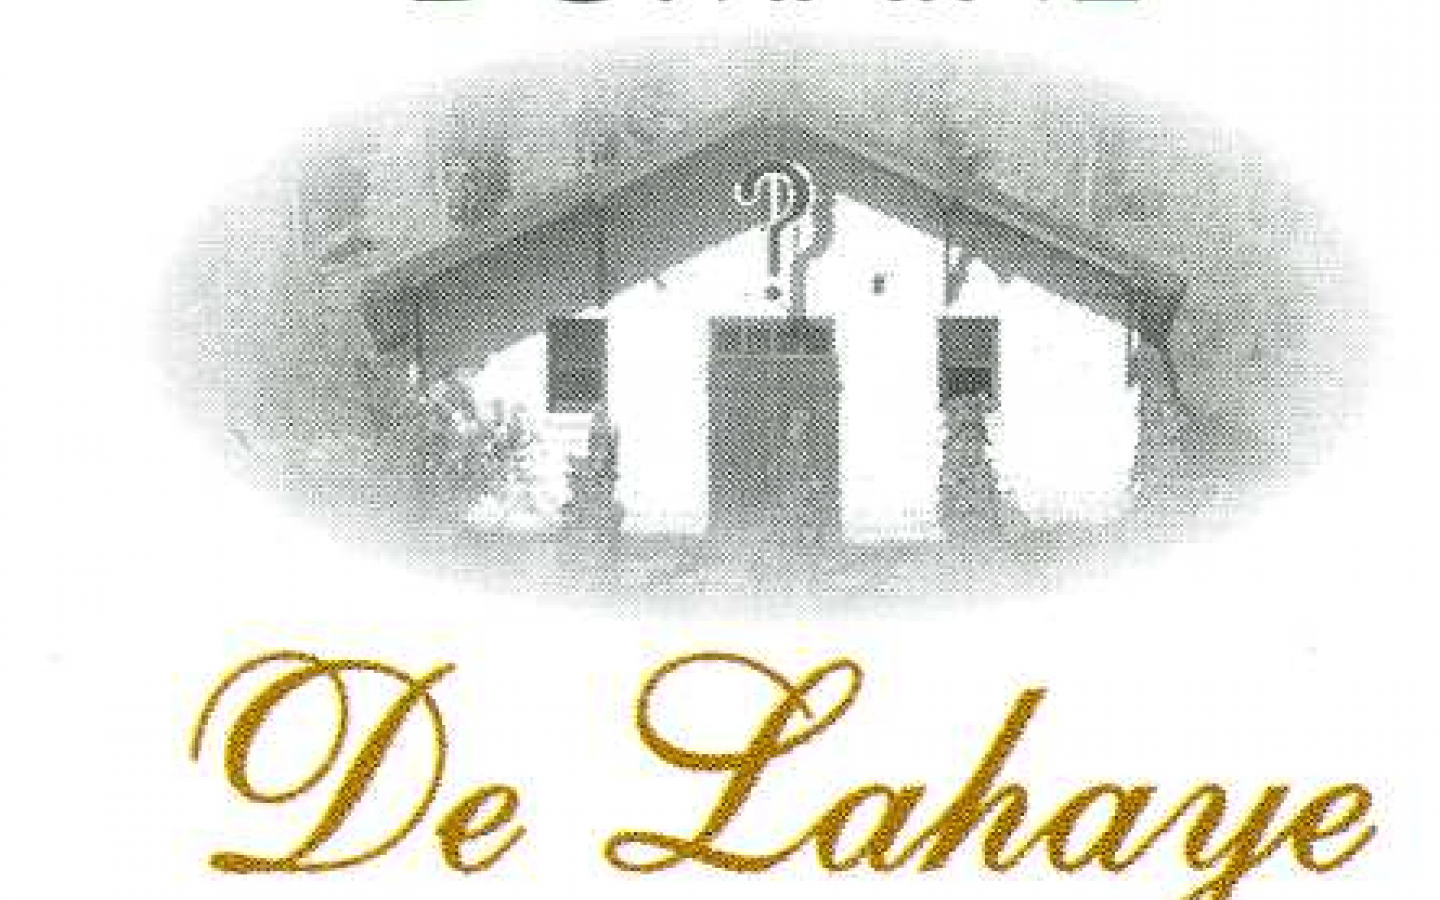 Domaine de lahaye